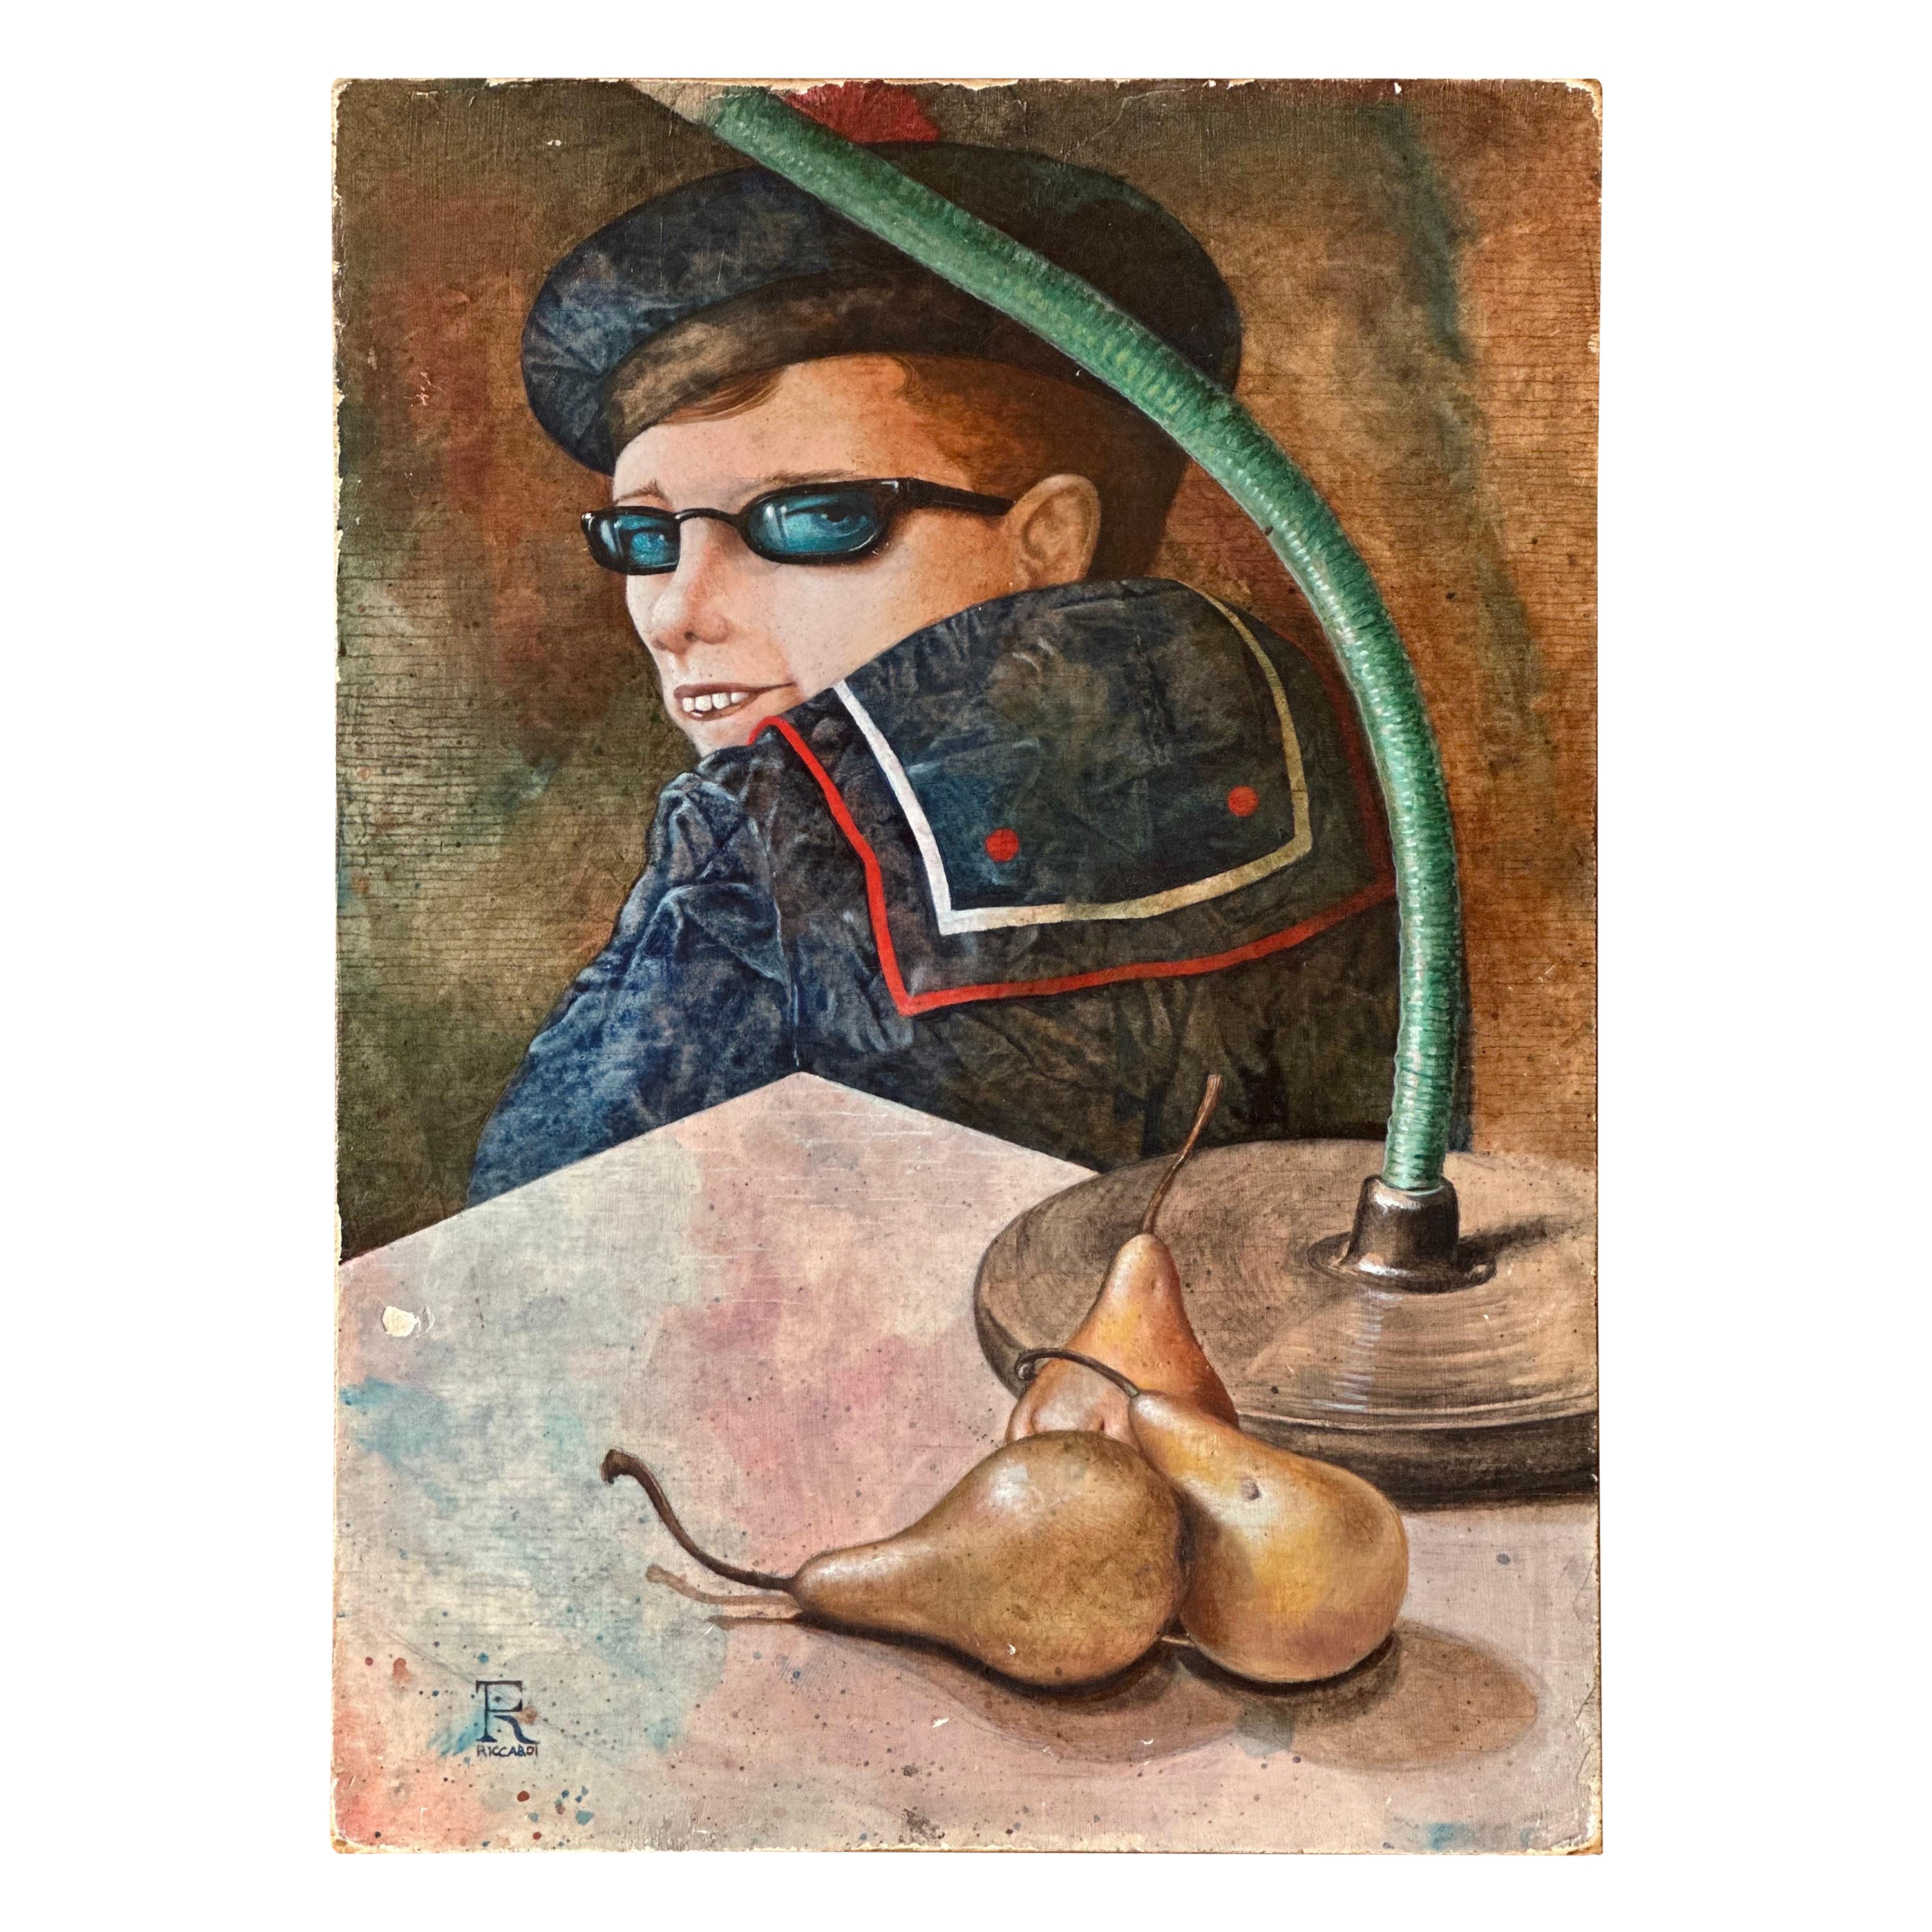 FABRIZIO RICCARDI, surrealist portrait with pears